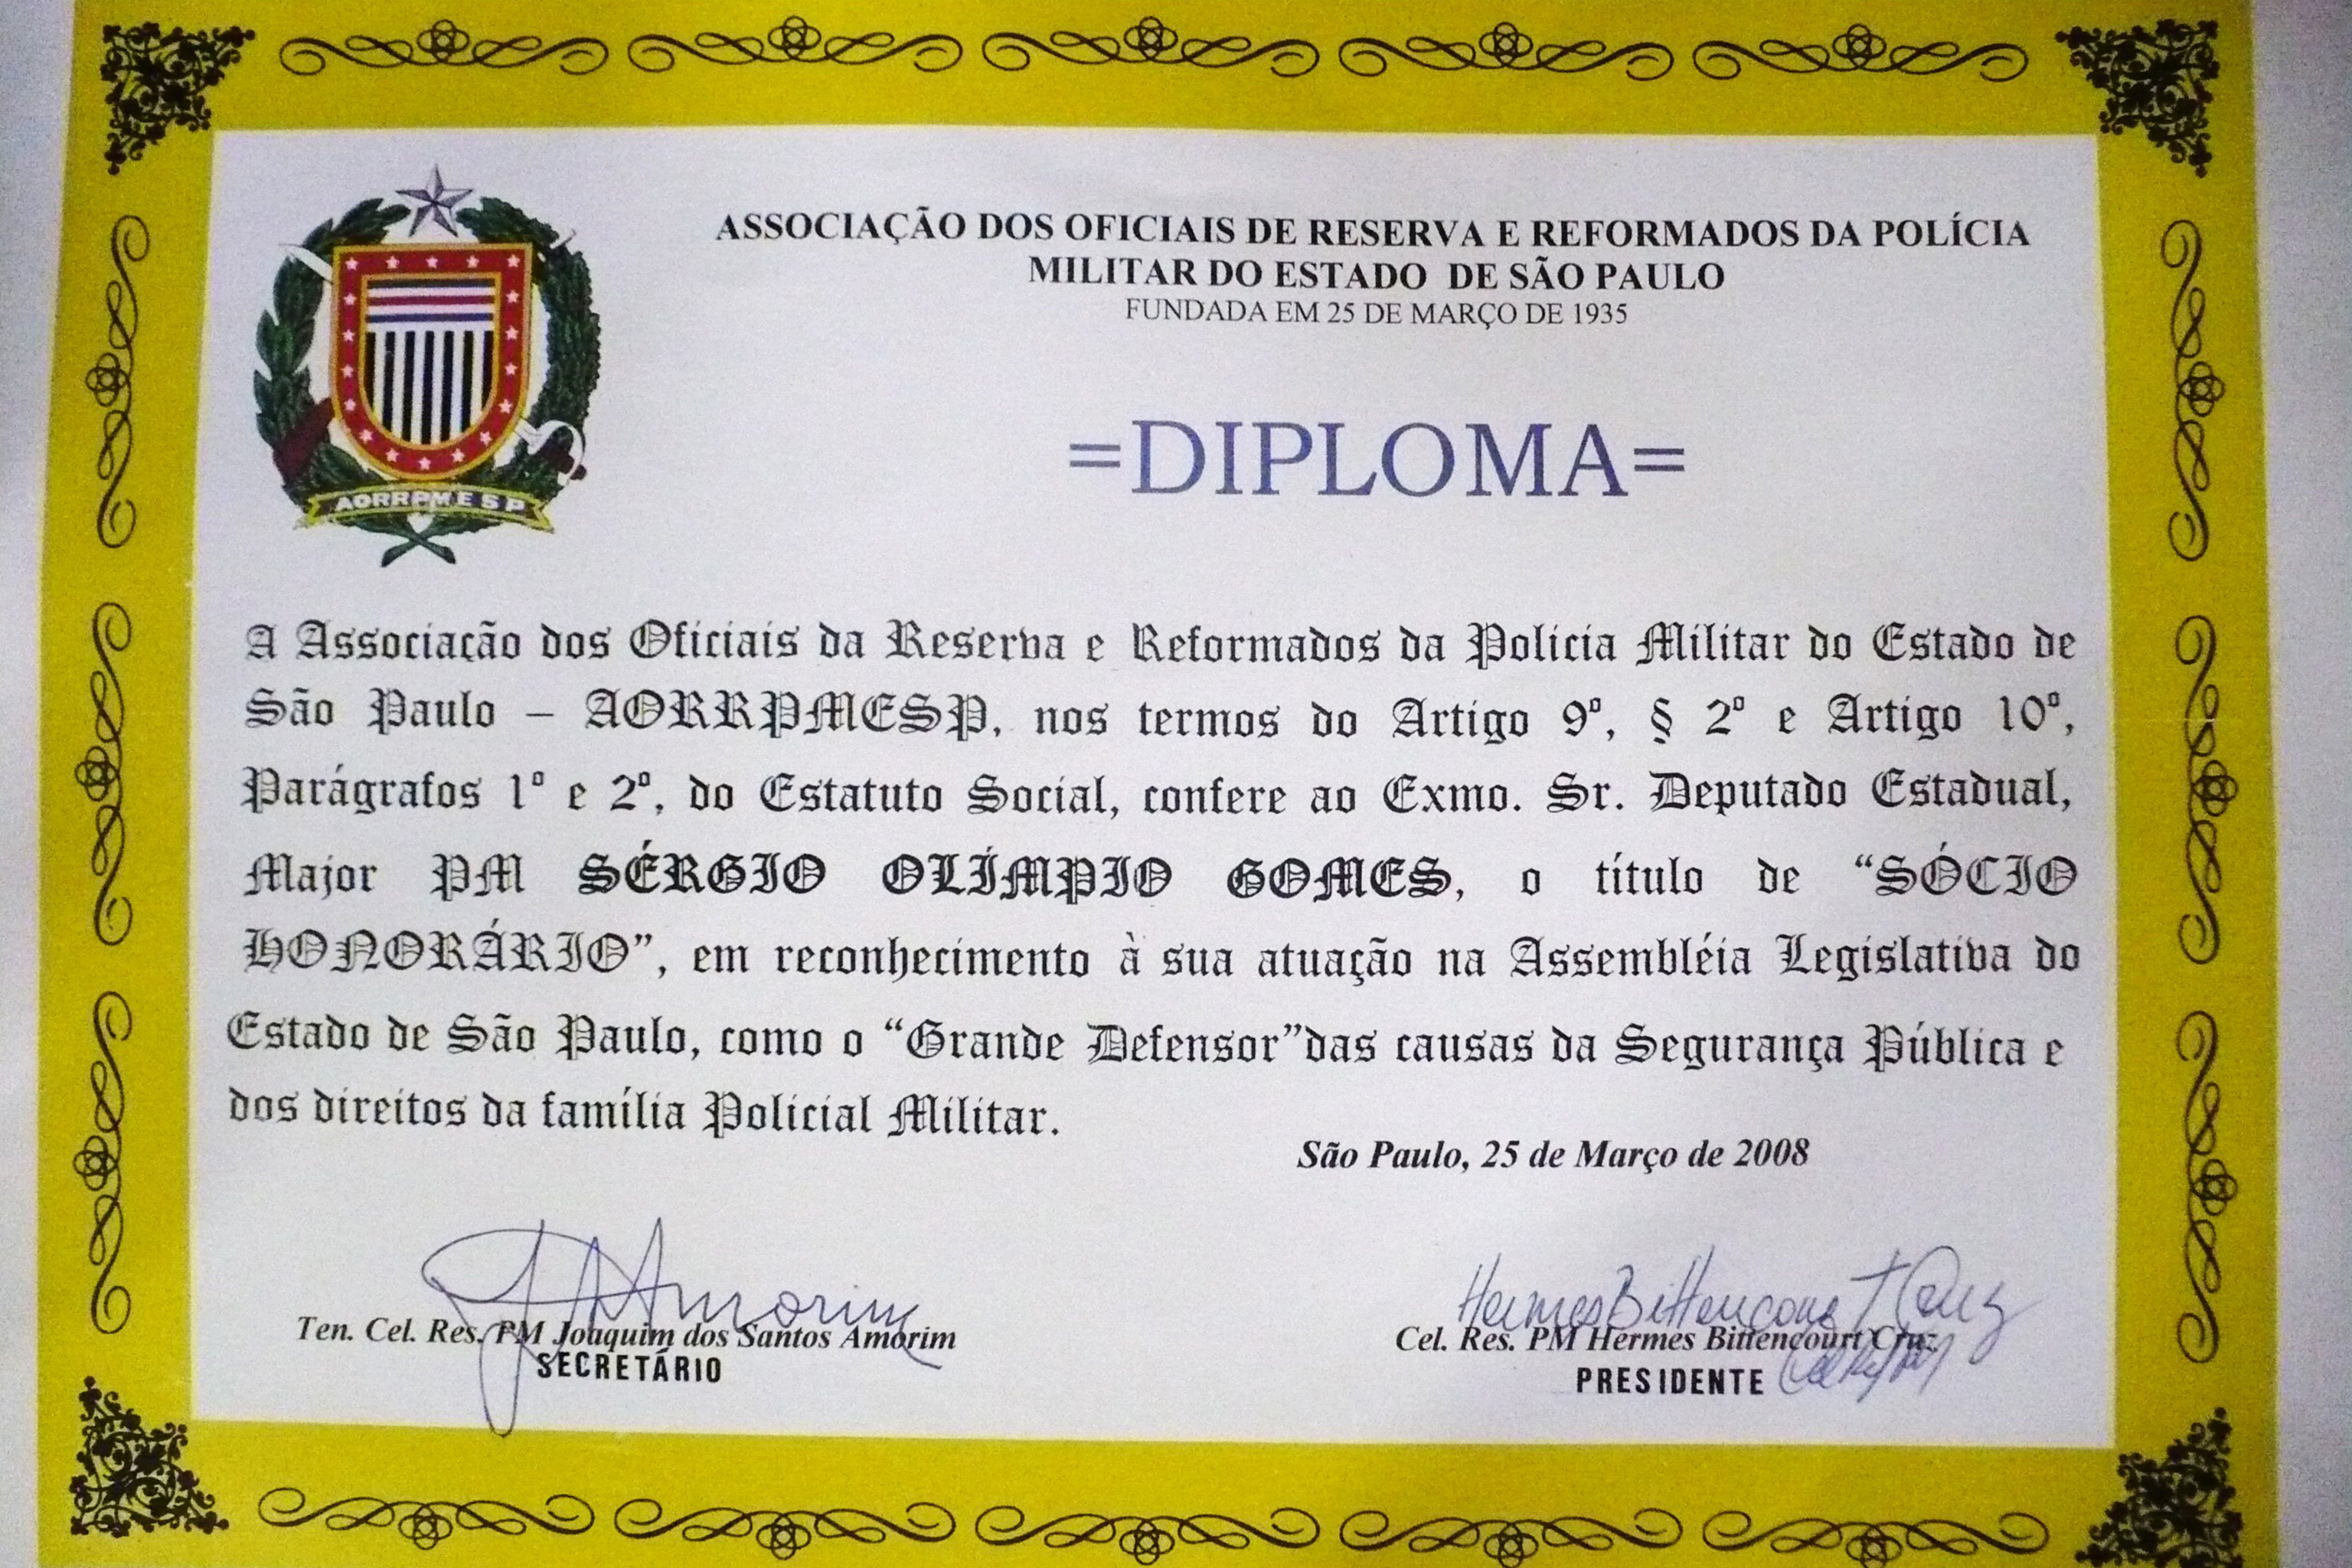 Diploma de scio honorrio do deputado Olmpio Gomes<a style='float:right;color:#ccc' href='https://www3.al.sp.gov.br/repositorio/noticia/04-2008/OLIMPIO OFICIAIS RESERVA.jpg' target=_blank><i class='bi bi-zoom-in'></i> Clique para ver a imagem </a>